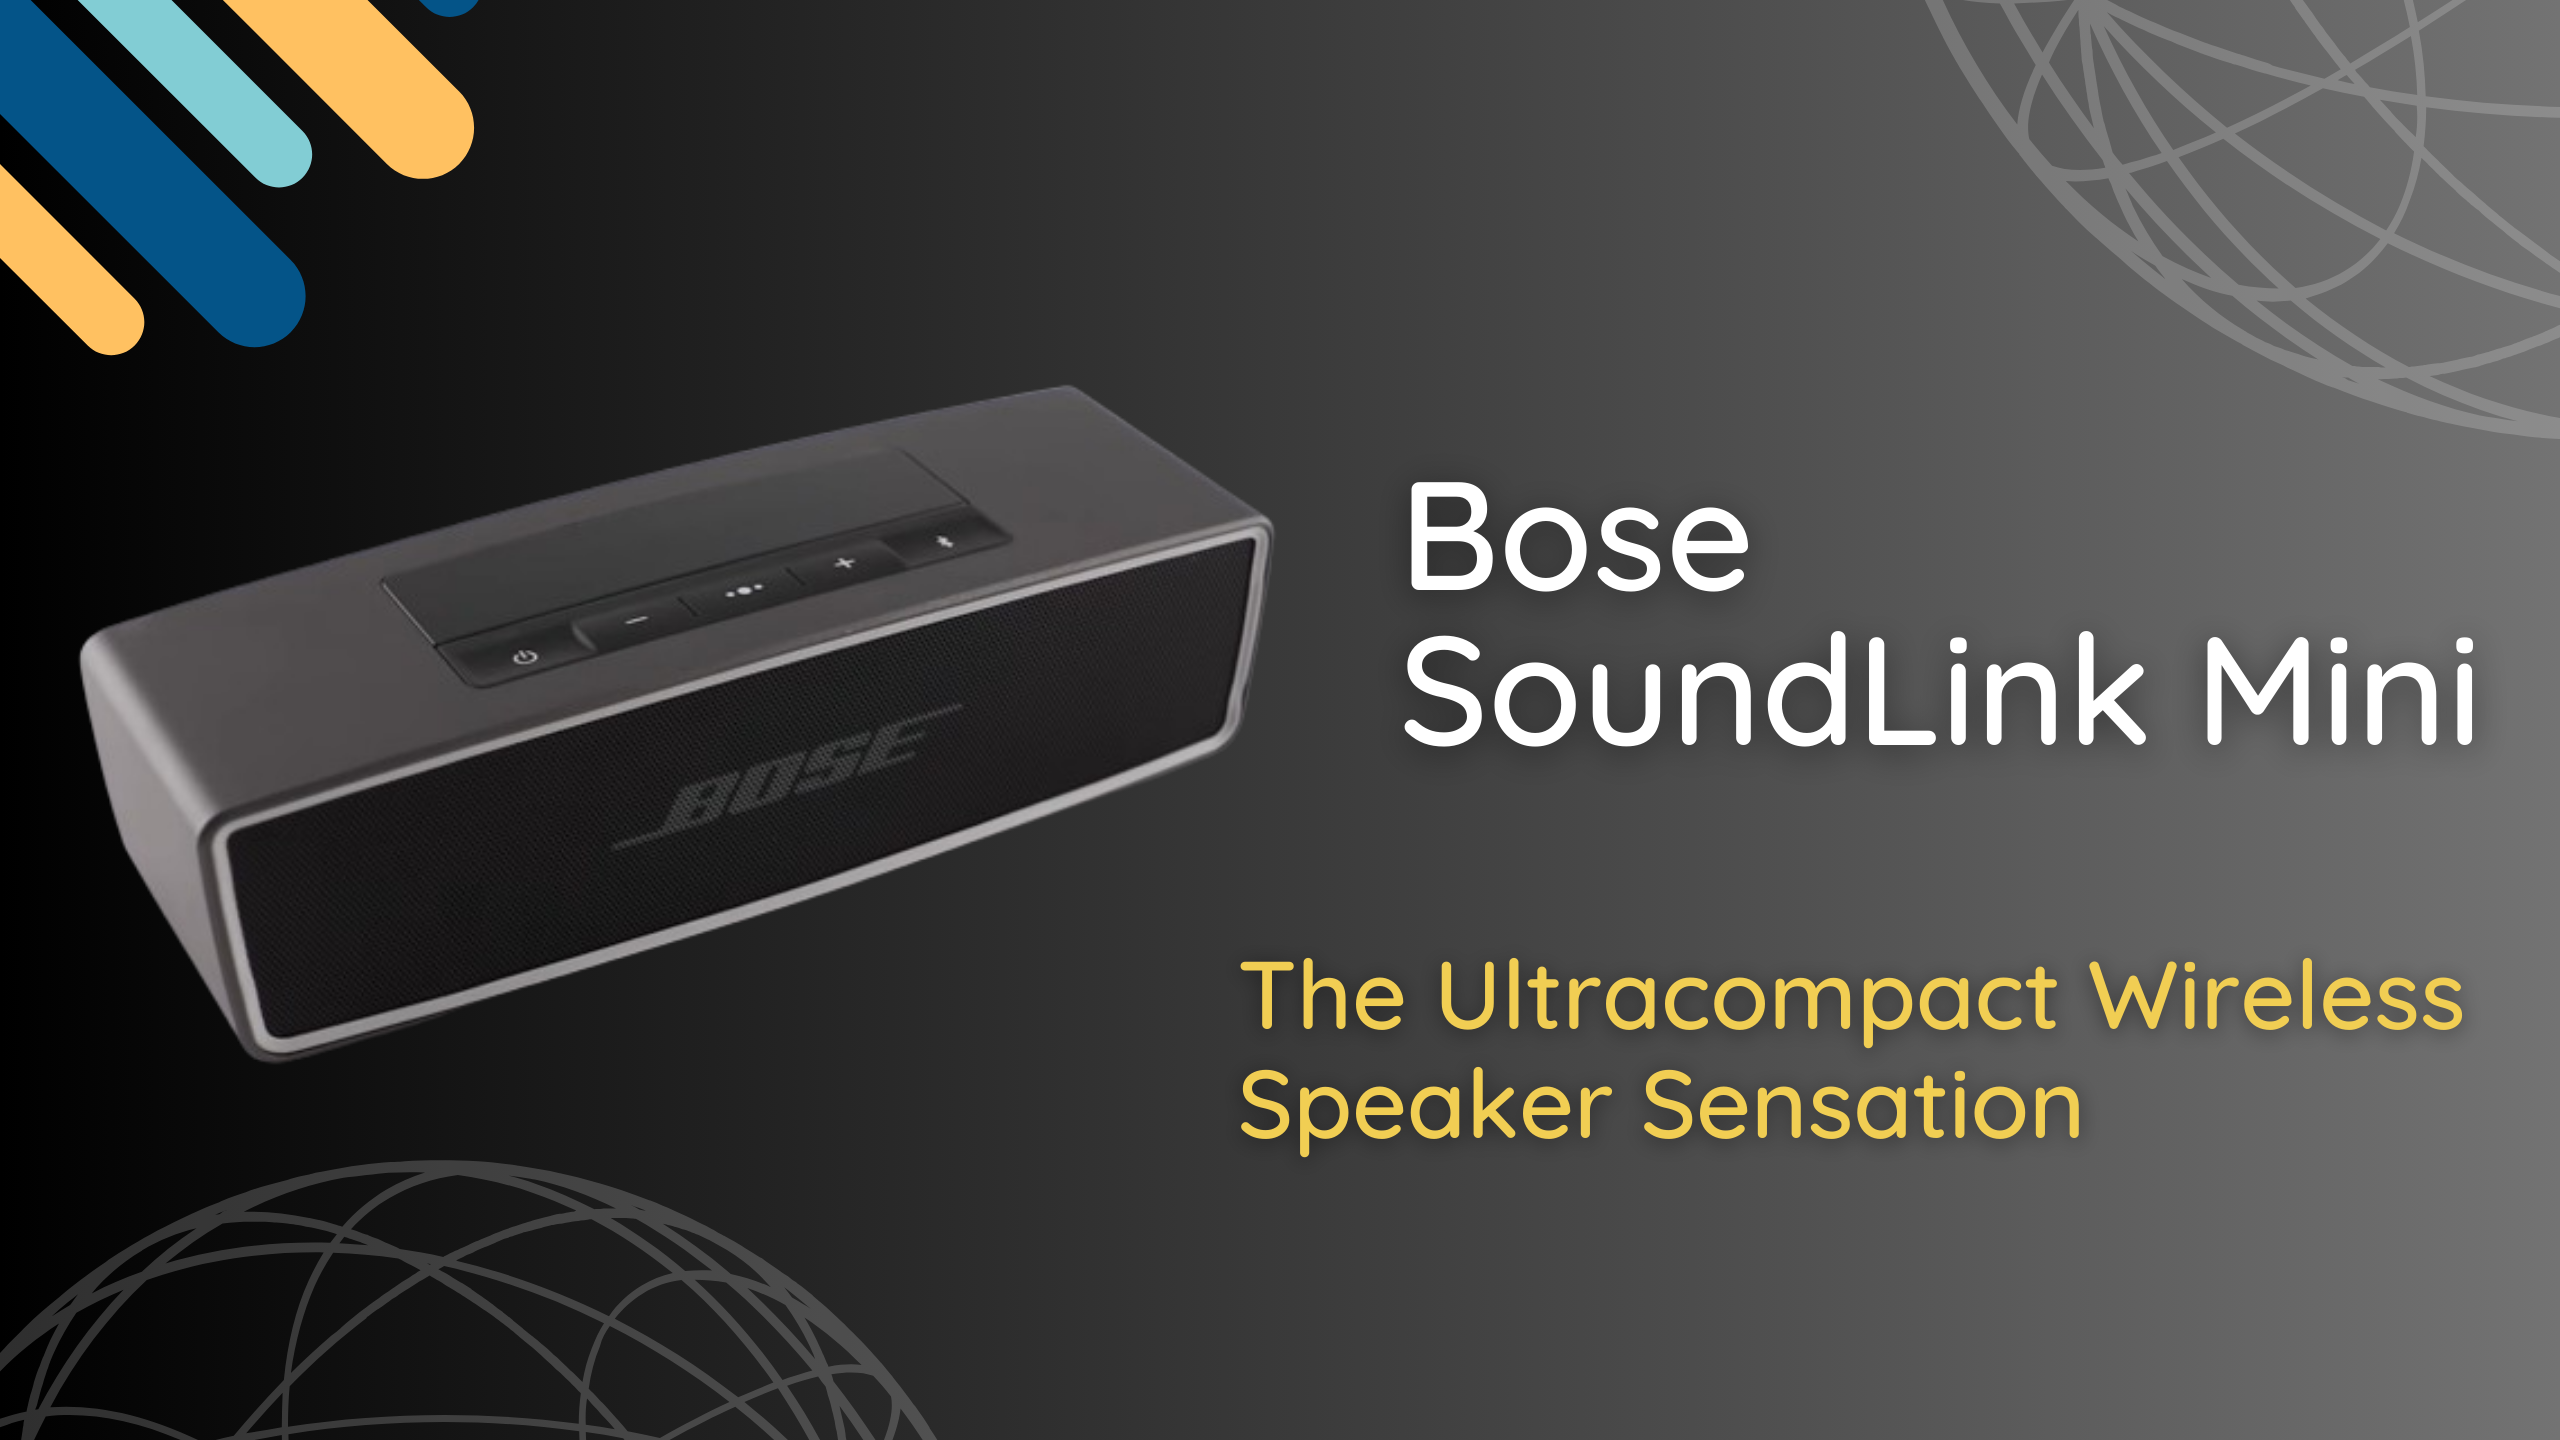 Bose SoundLink Mini: The Ultracompact Wireless Speaker Sensation